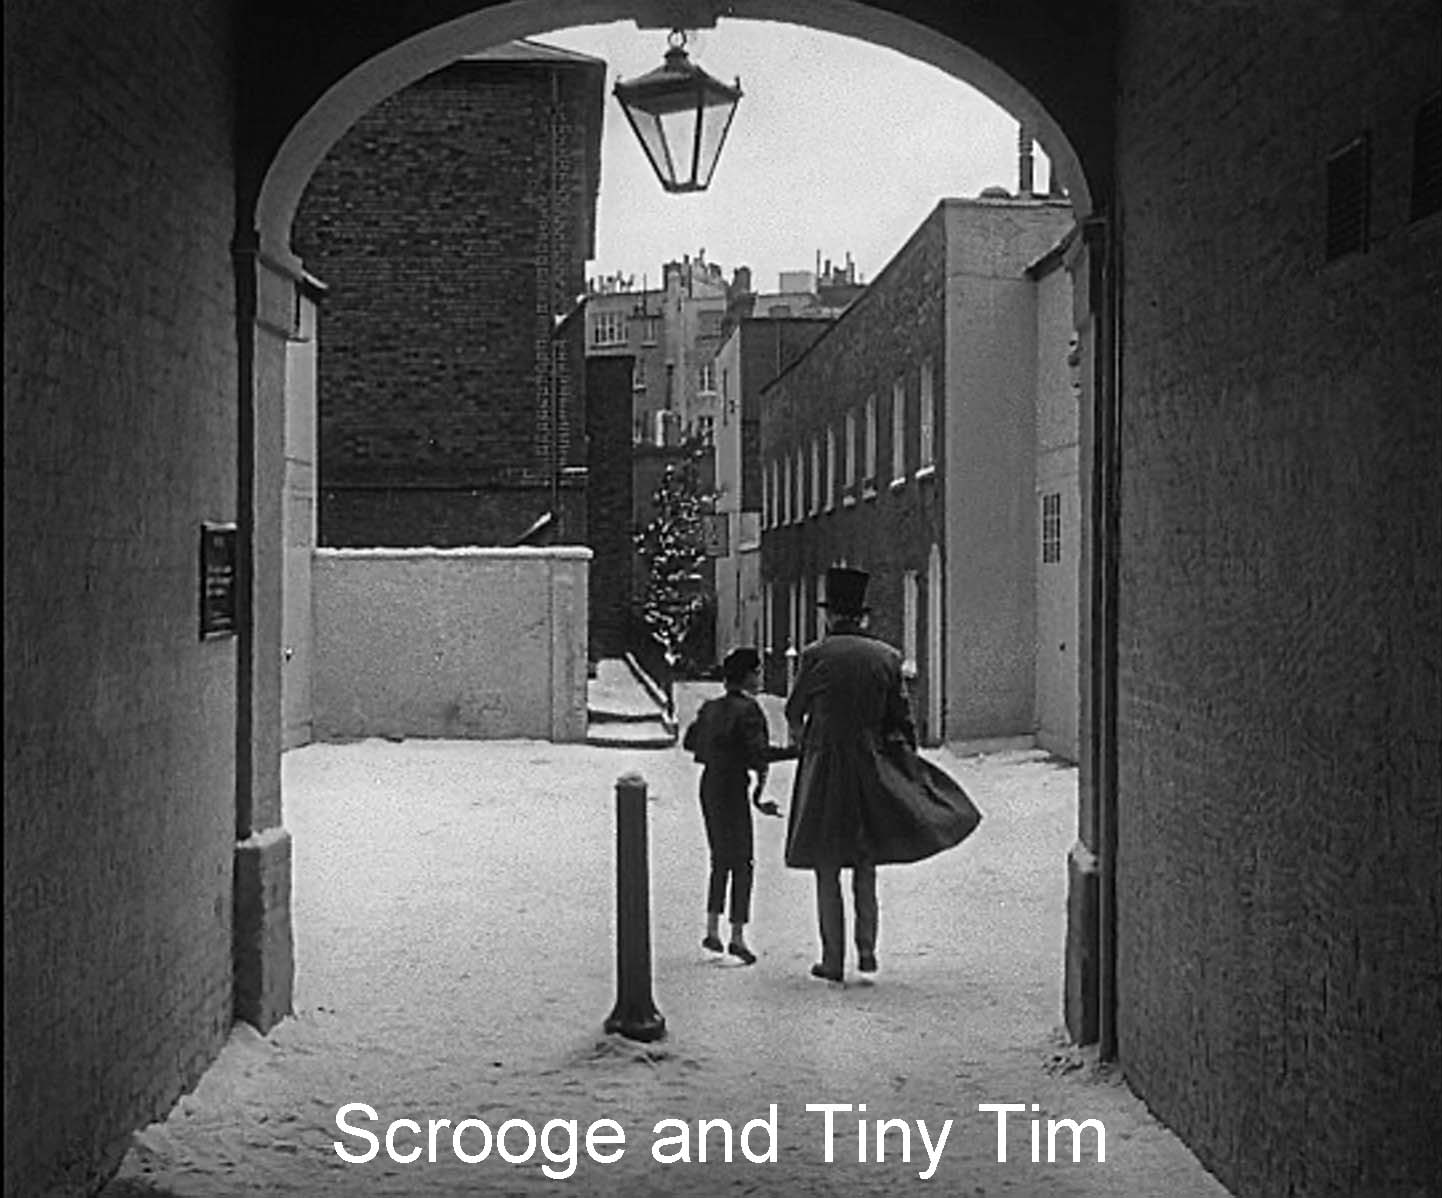  Closing scene: Scrooge and Tiny Tim